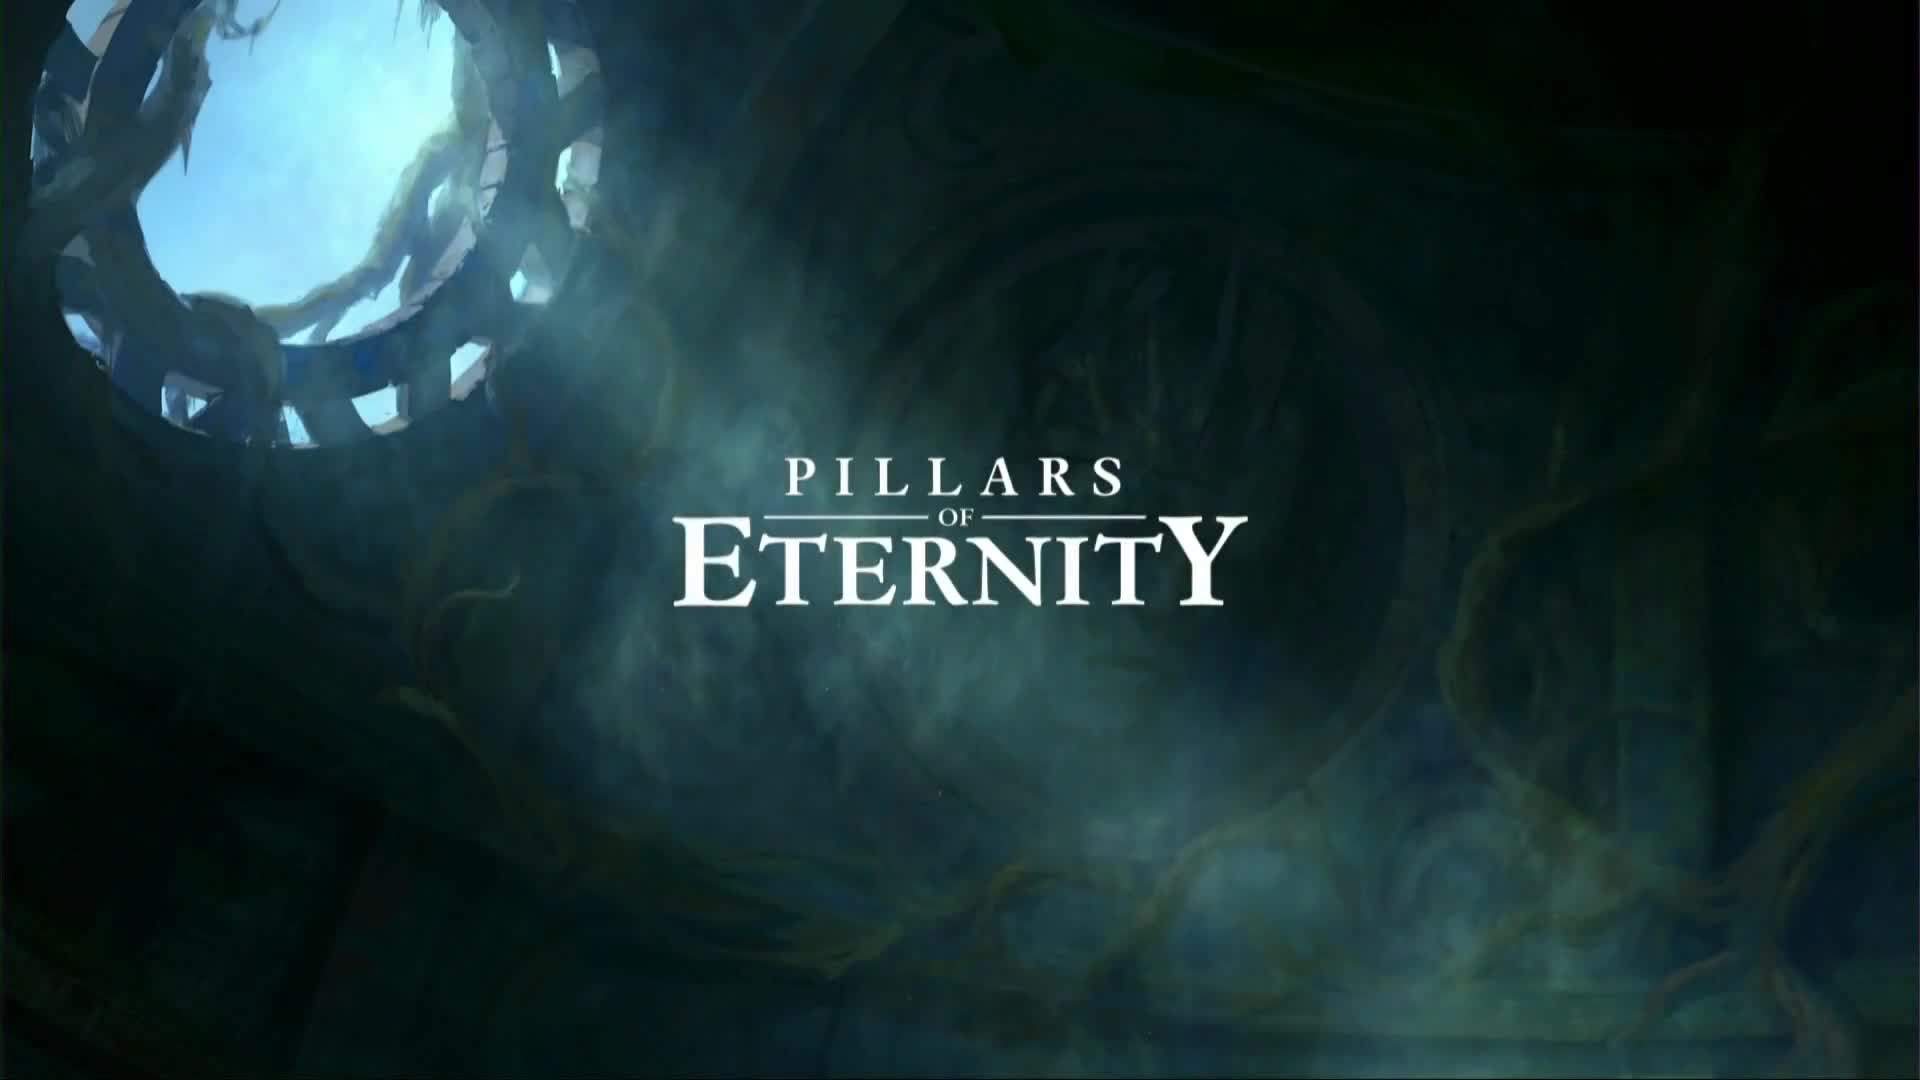 Pillars of Eternity - 20 minutes